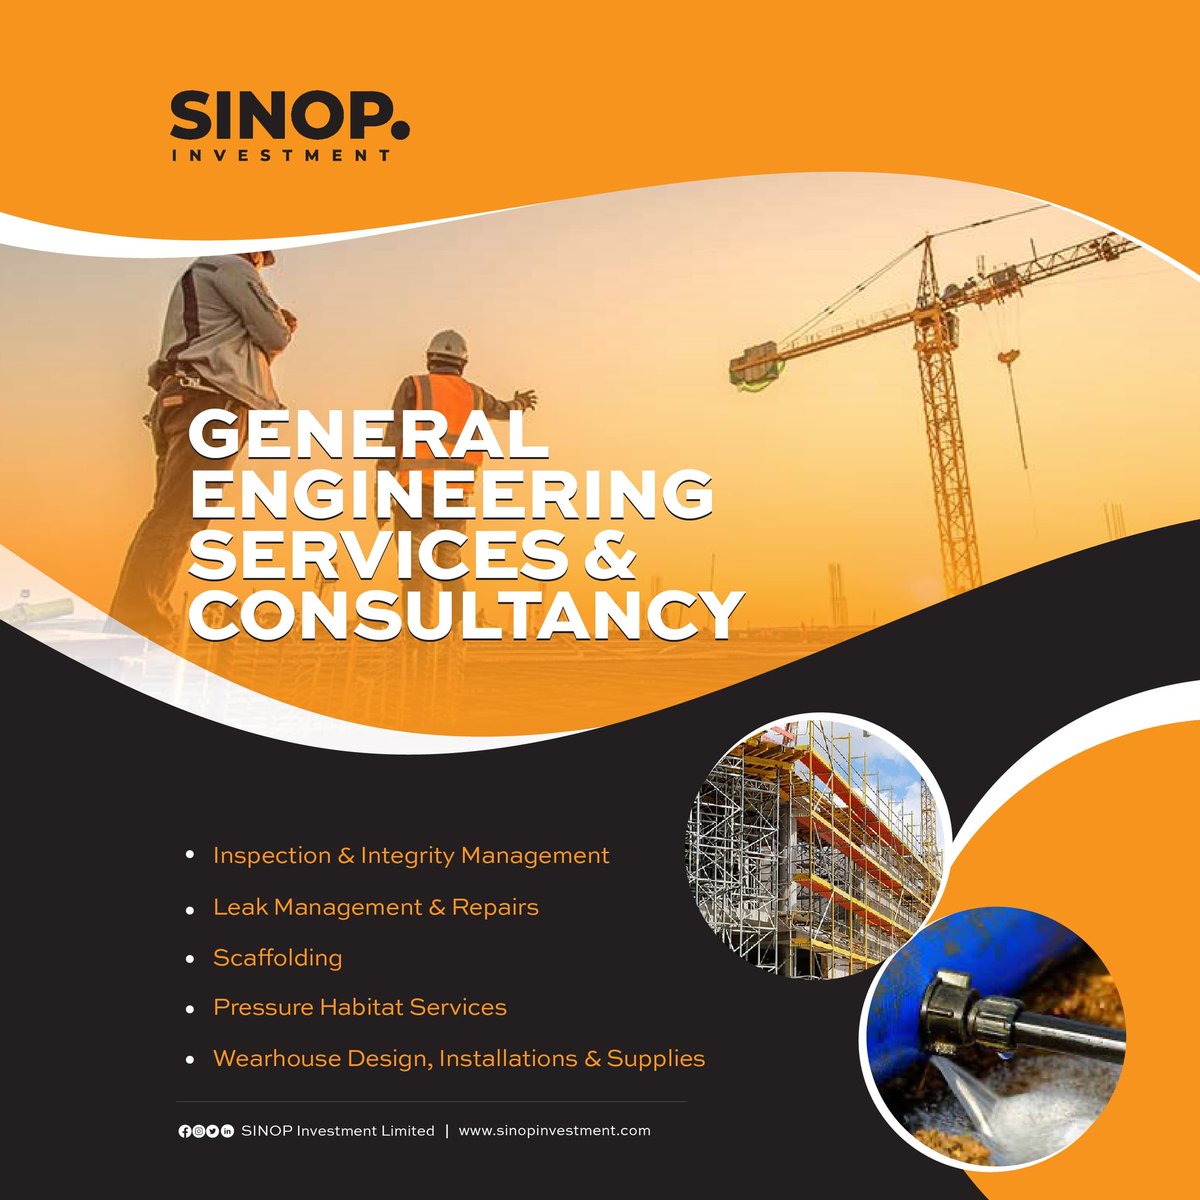 Unleash Innovation with SINOP Engineering Services
#engineeringservices #engineeringexcellence #designinnovation #buildinginnovation #creatingpossibilities #sustainablegrowth